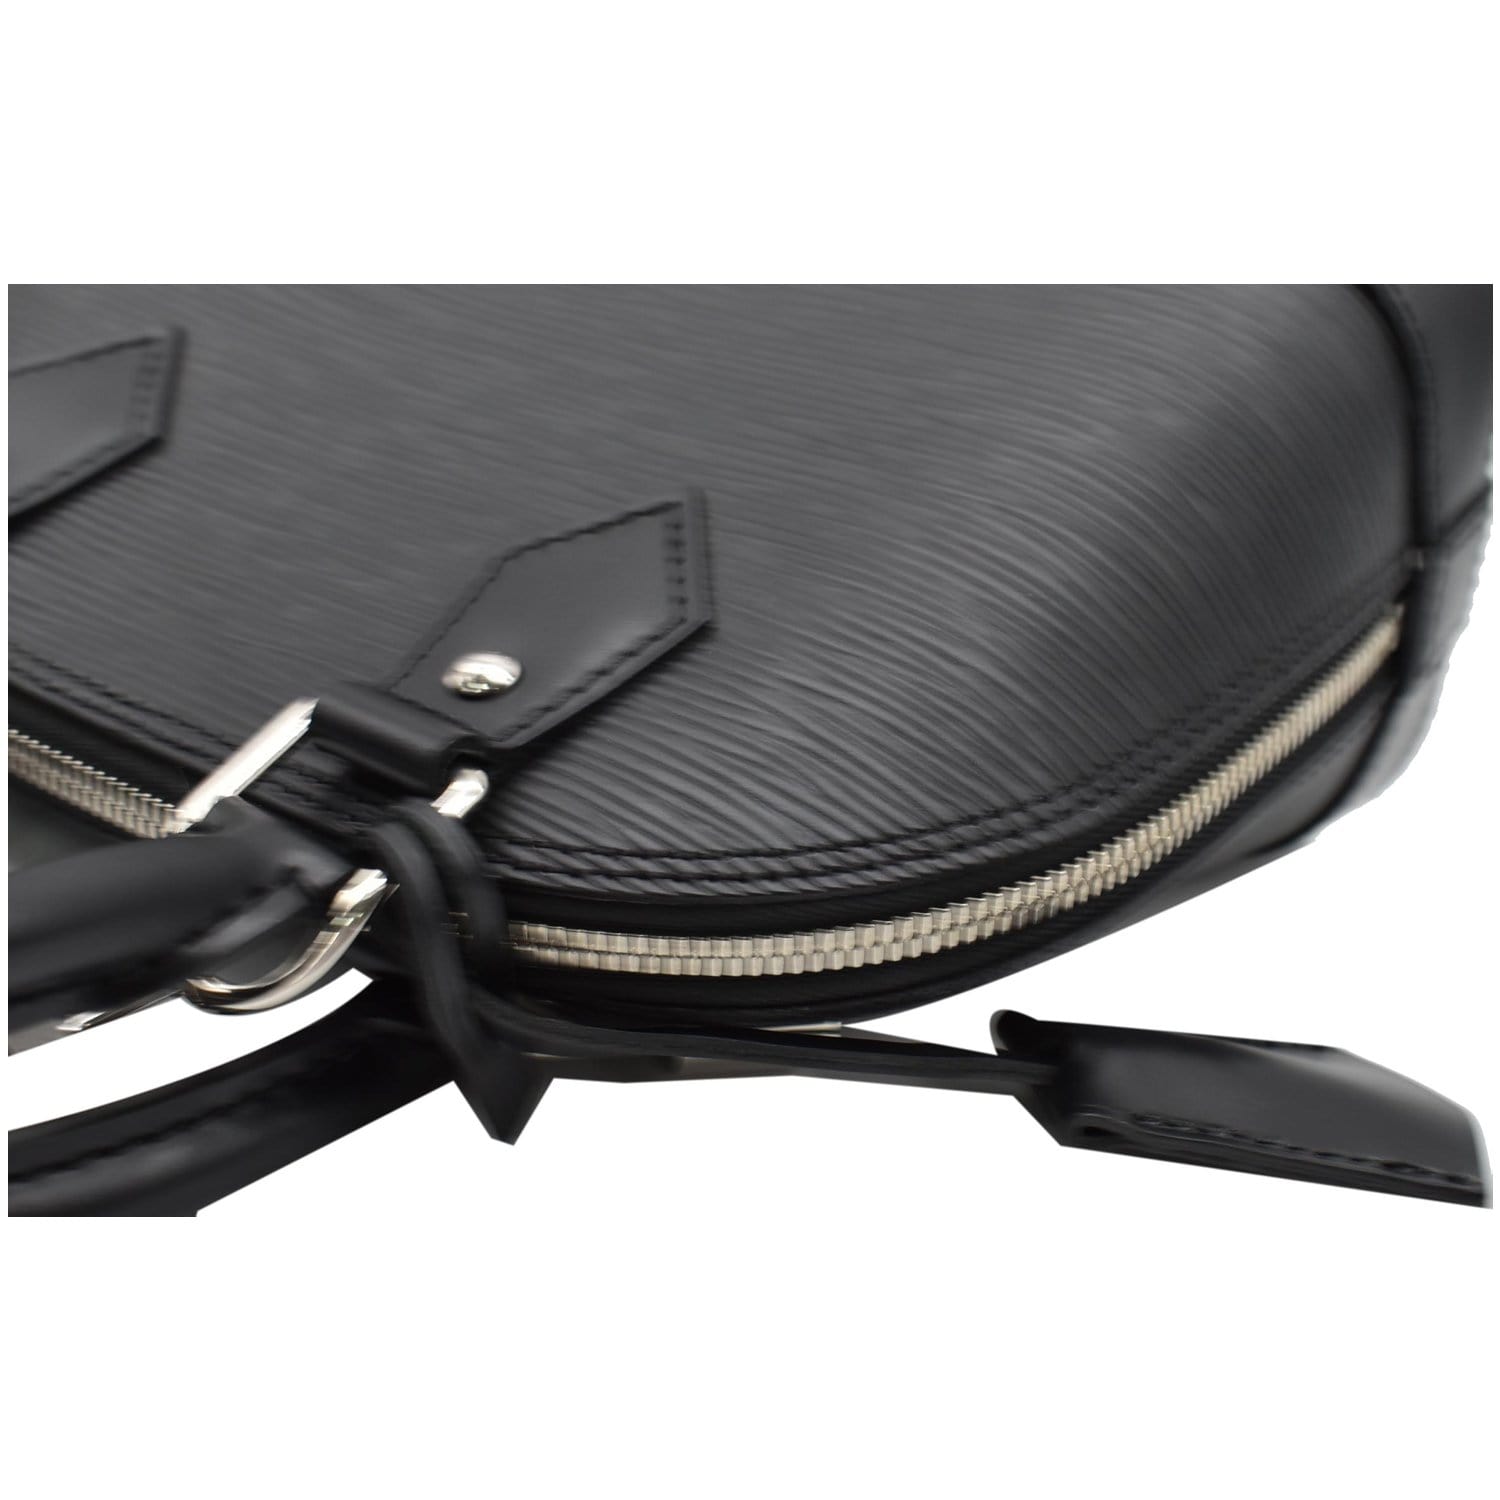 bb epi leather handbags